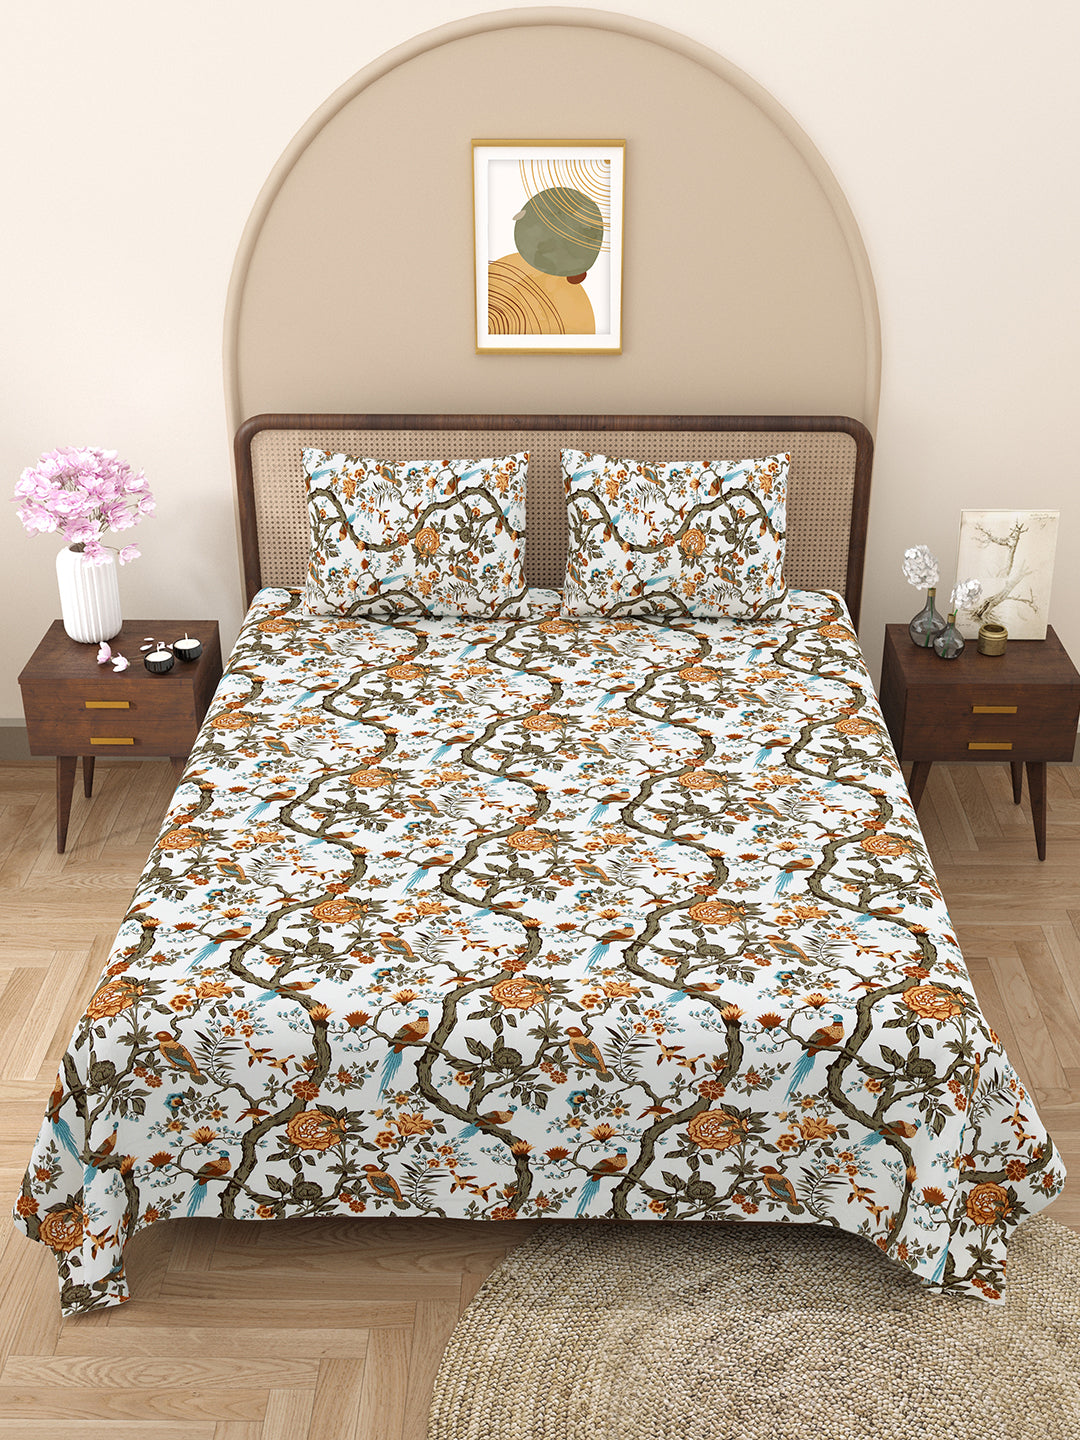 Bella Casa Fashion & Retail Ltd BEDSHEET 88 X 96 Inch / Brown / Cotton Double Bedsheet with 2 Pillow Covers Cotton Floral Design Brown Colour - Element Collection